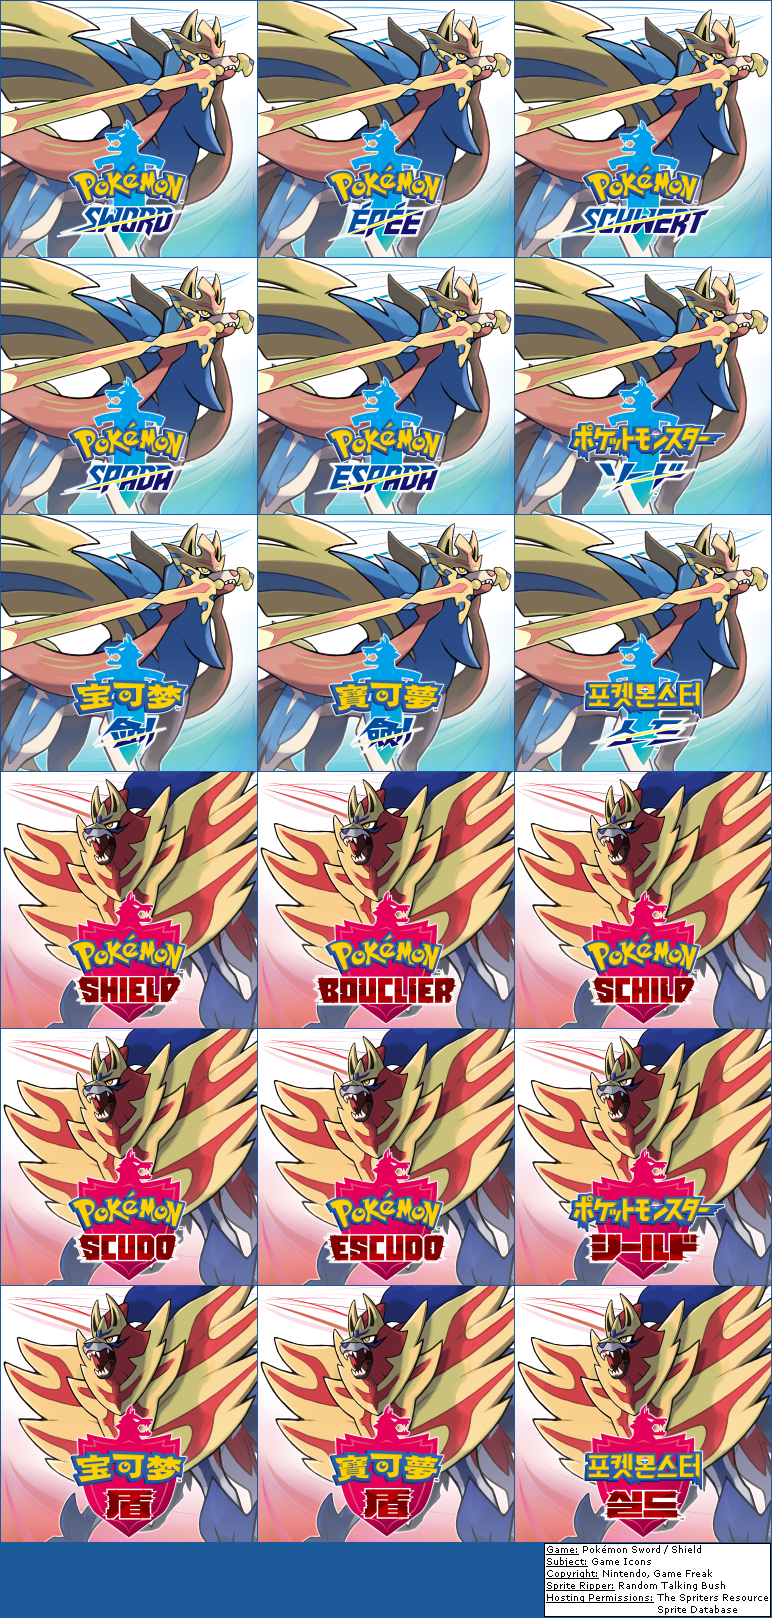 Pokémon Sword / Shield - HOME Menu Icons